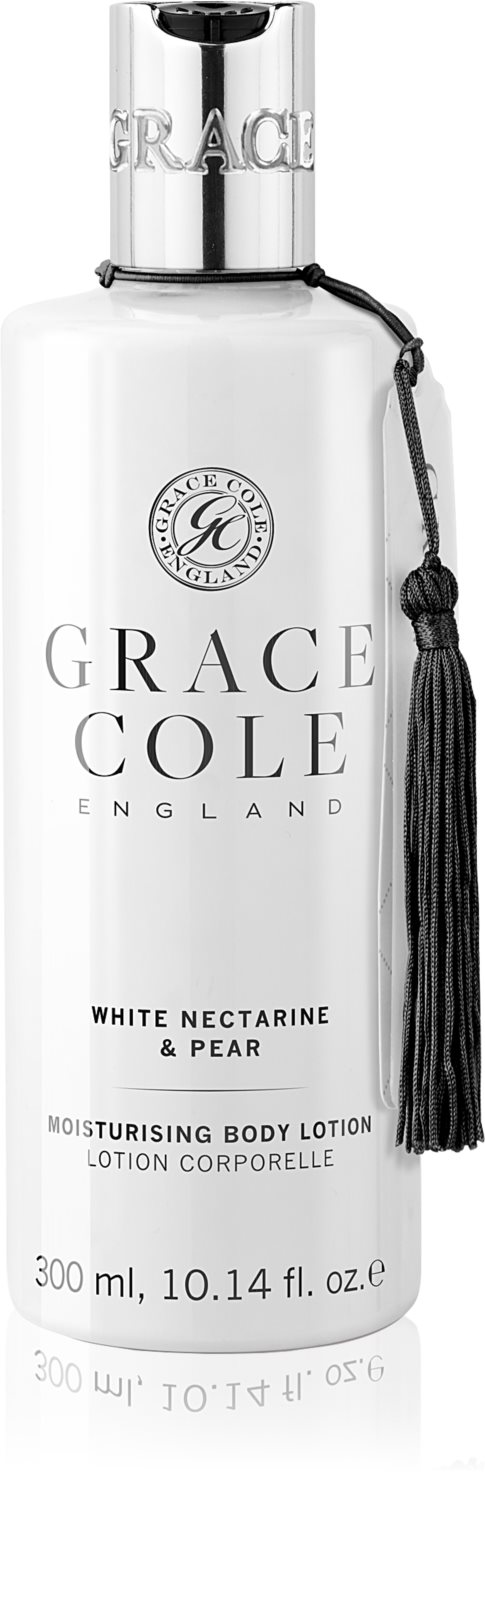 GRACE COLE: White Nectarine & Pear